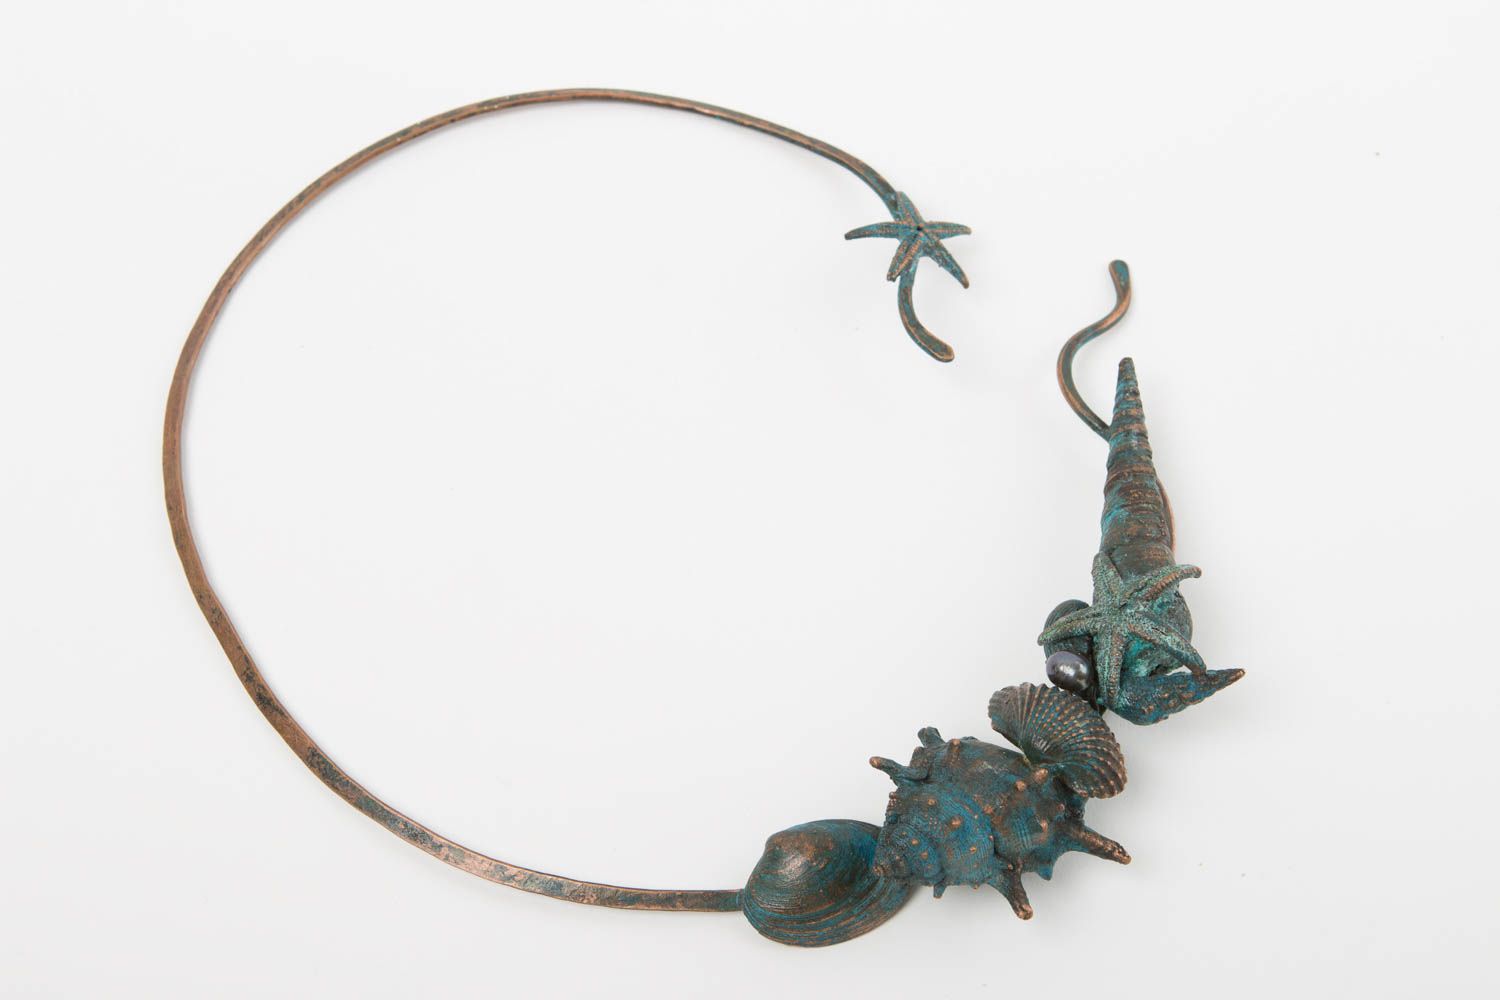 Handmade metal necklace wire wrap ideas beautiful jewellery neck accessories photo 2